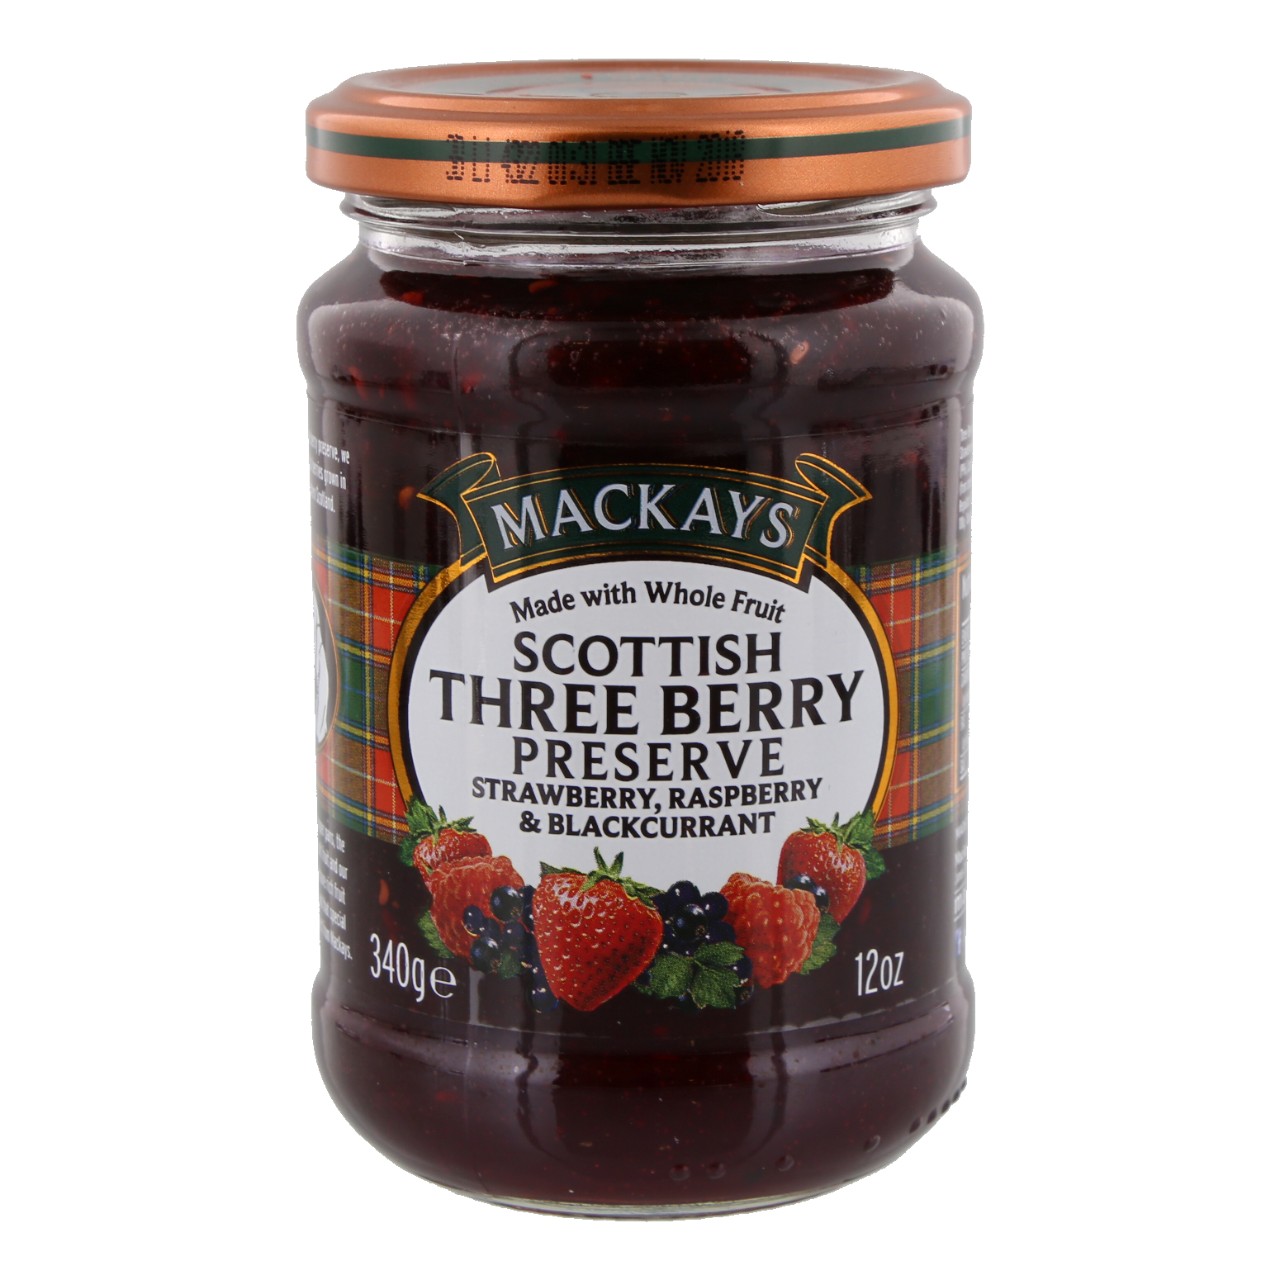 Scottish three berry preserve strawberry, raspberry  blackcurrant